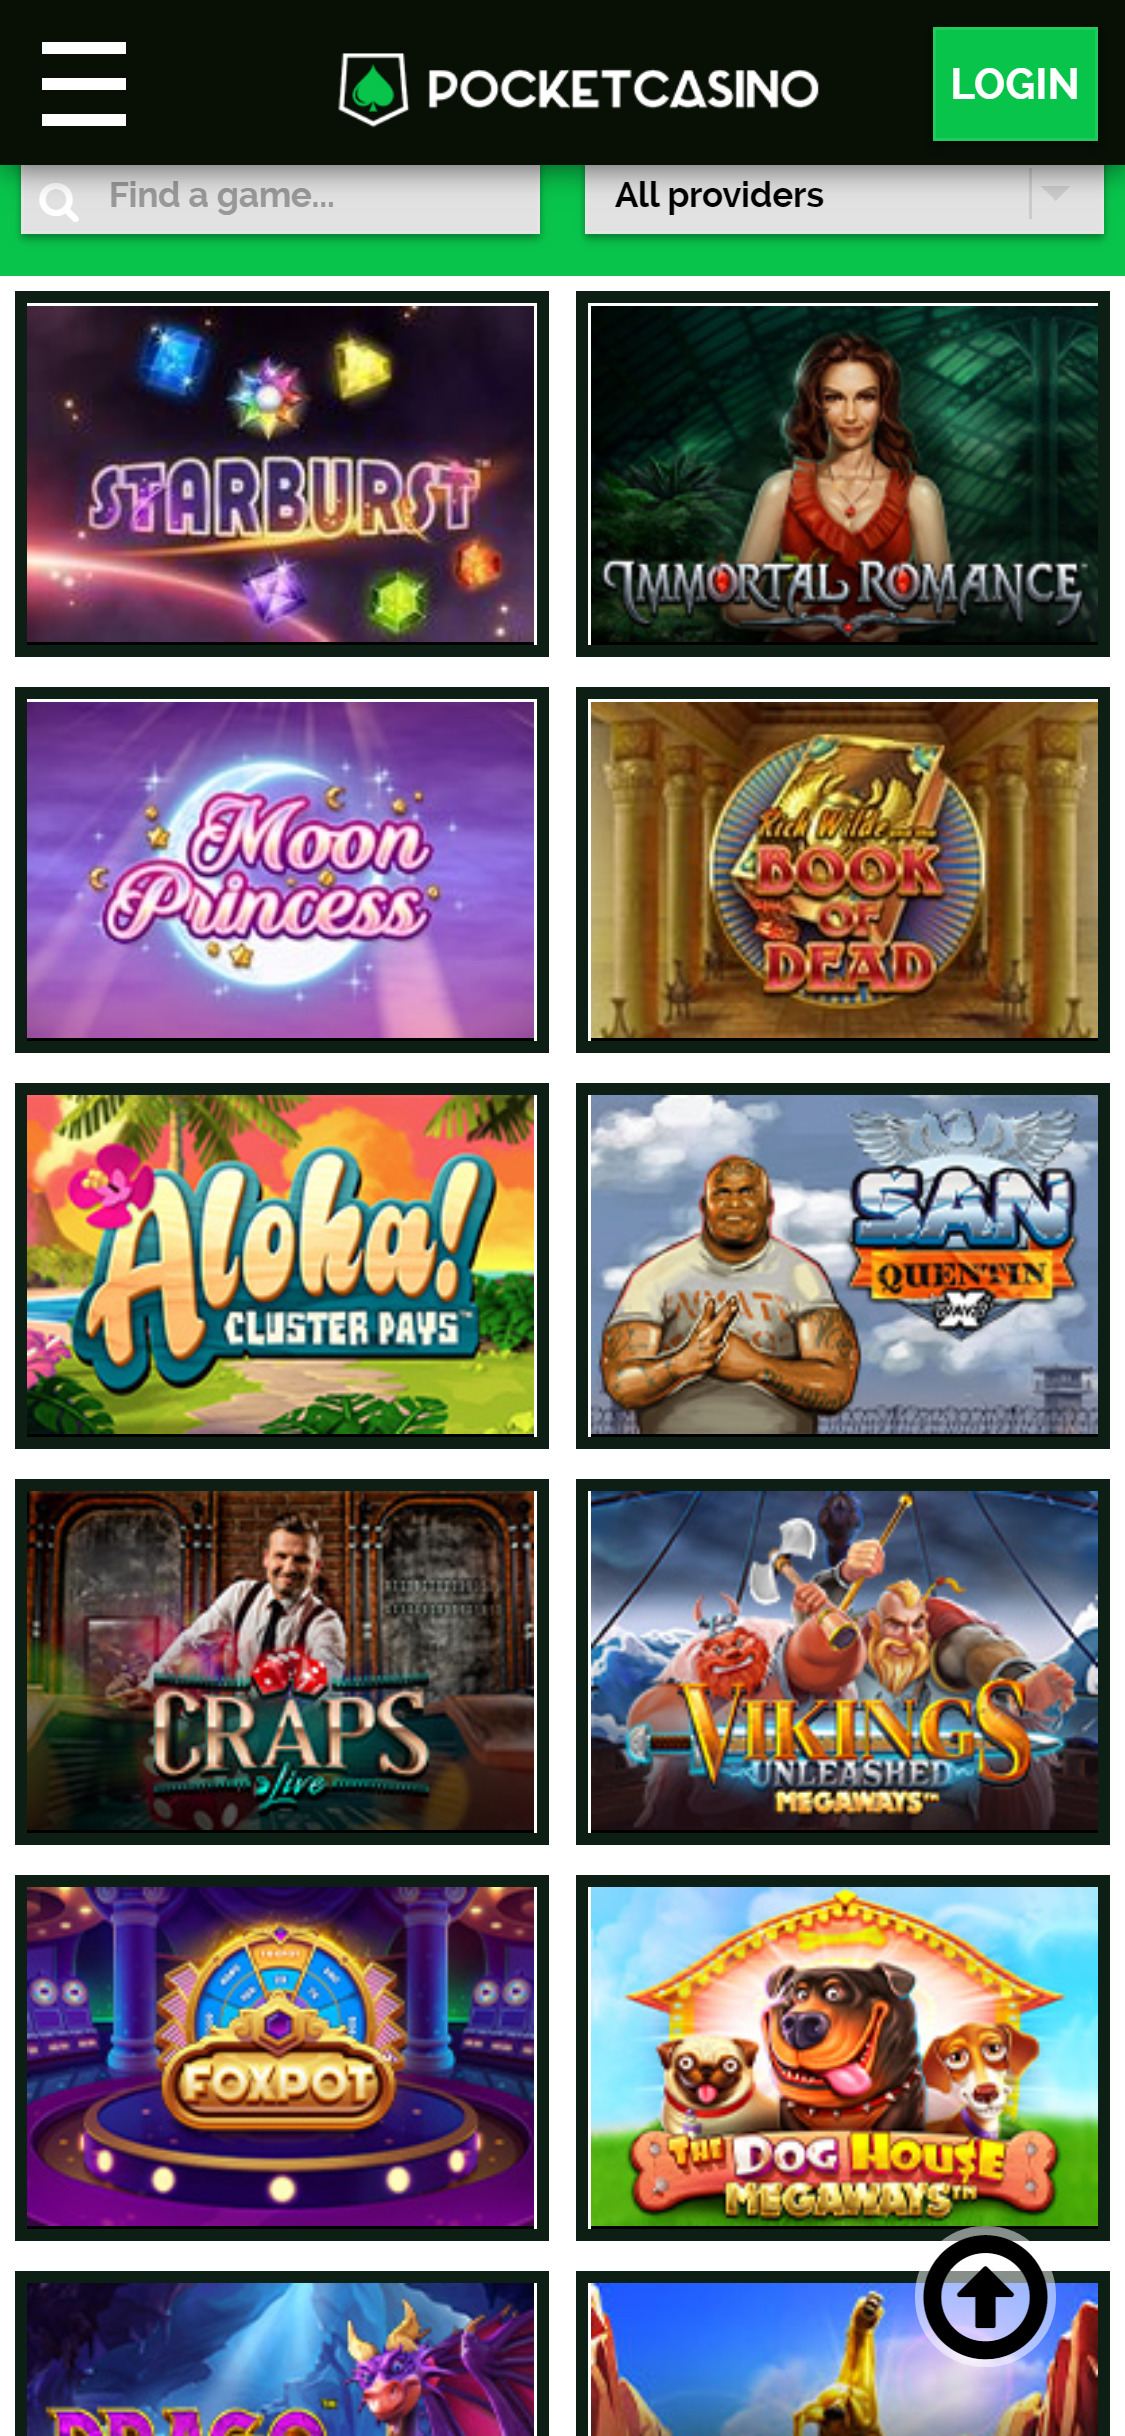 Pocket Casino Mobile Games Review